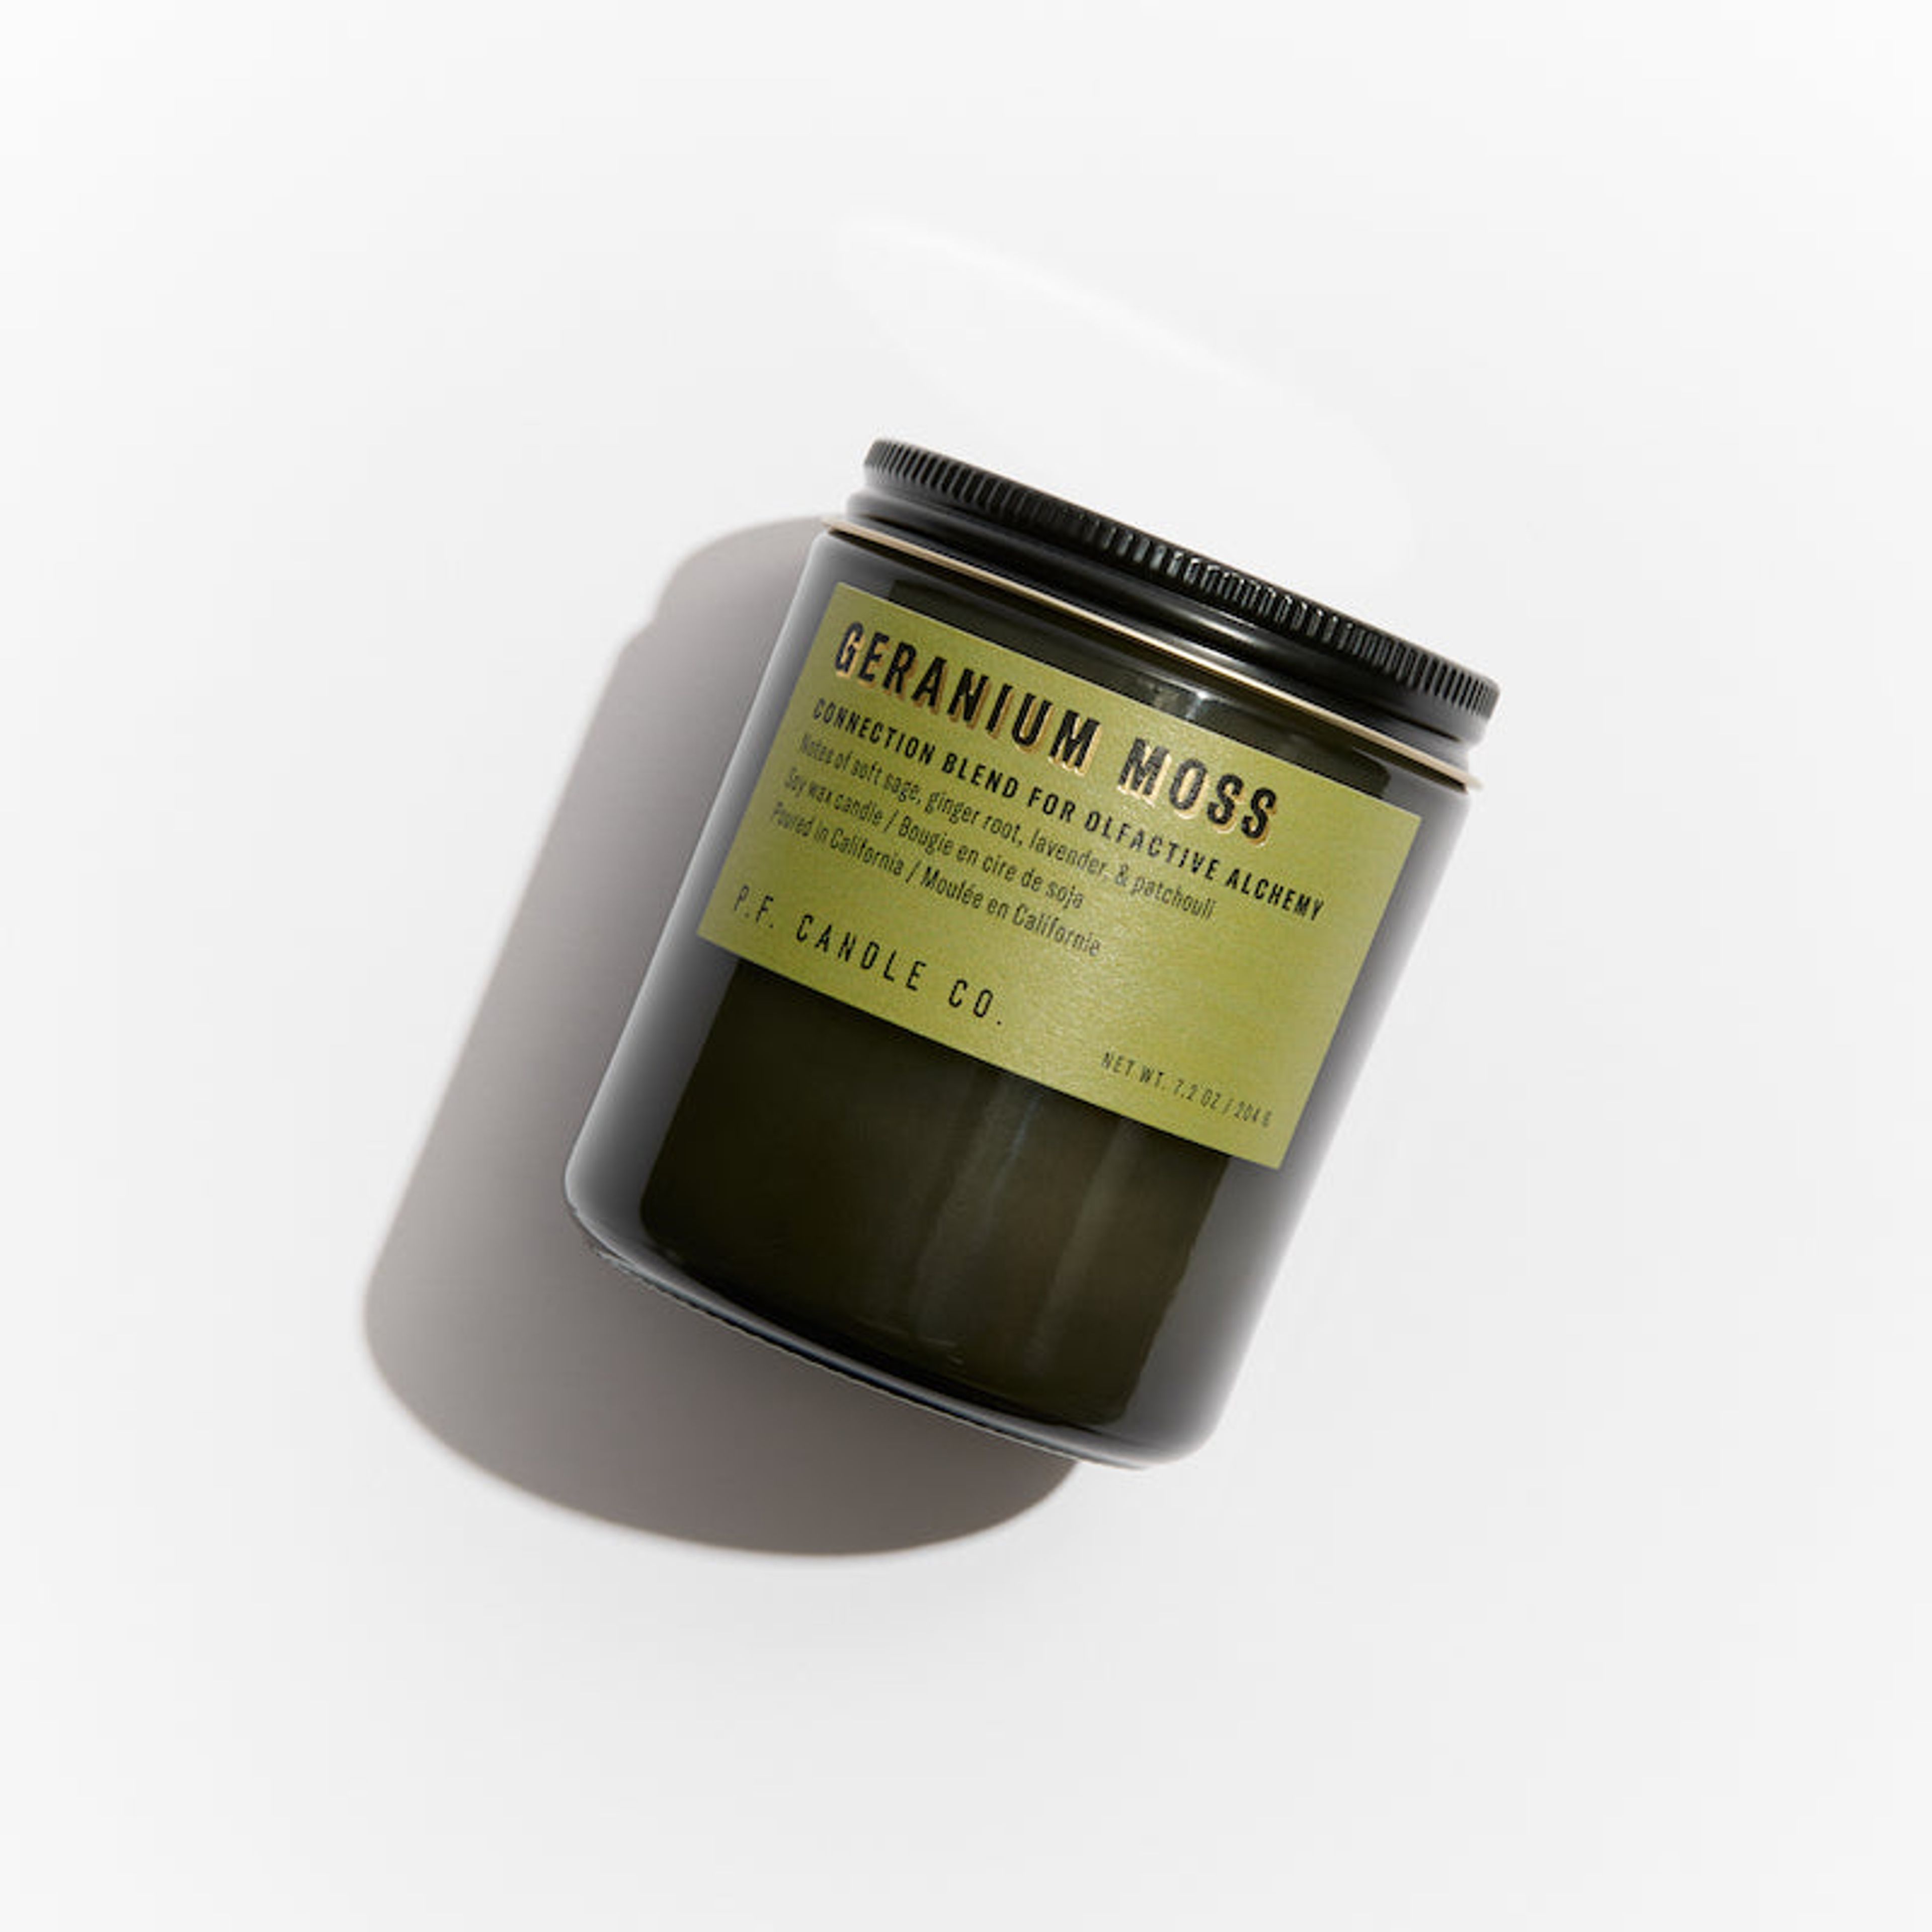 Geranium Moss– Alchemy Candle